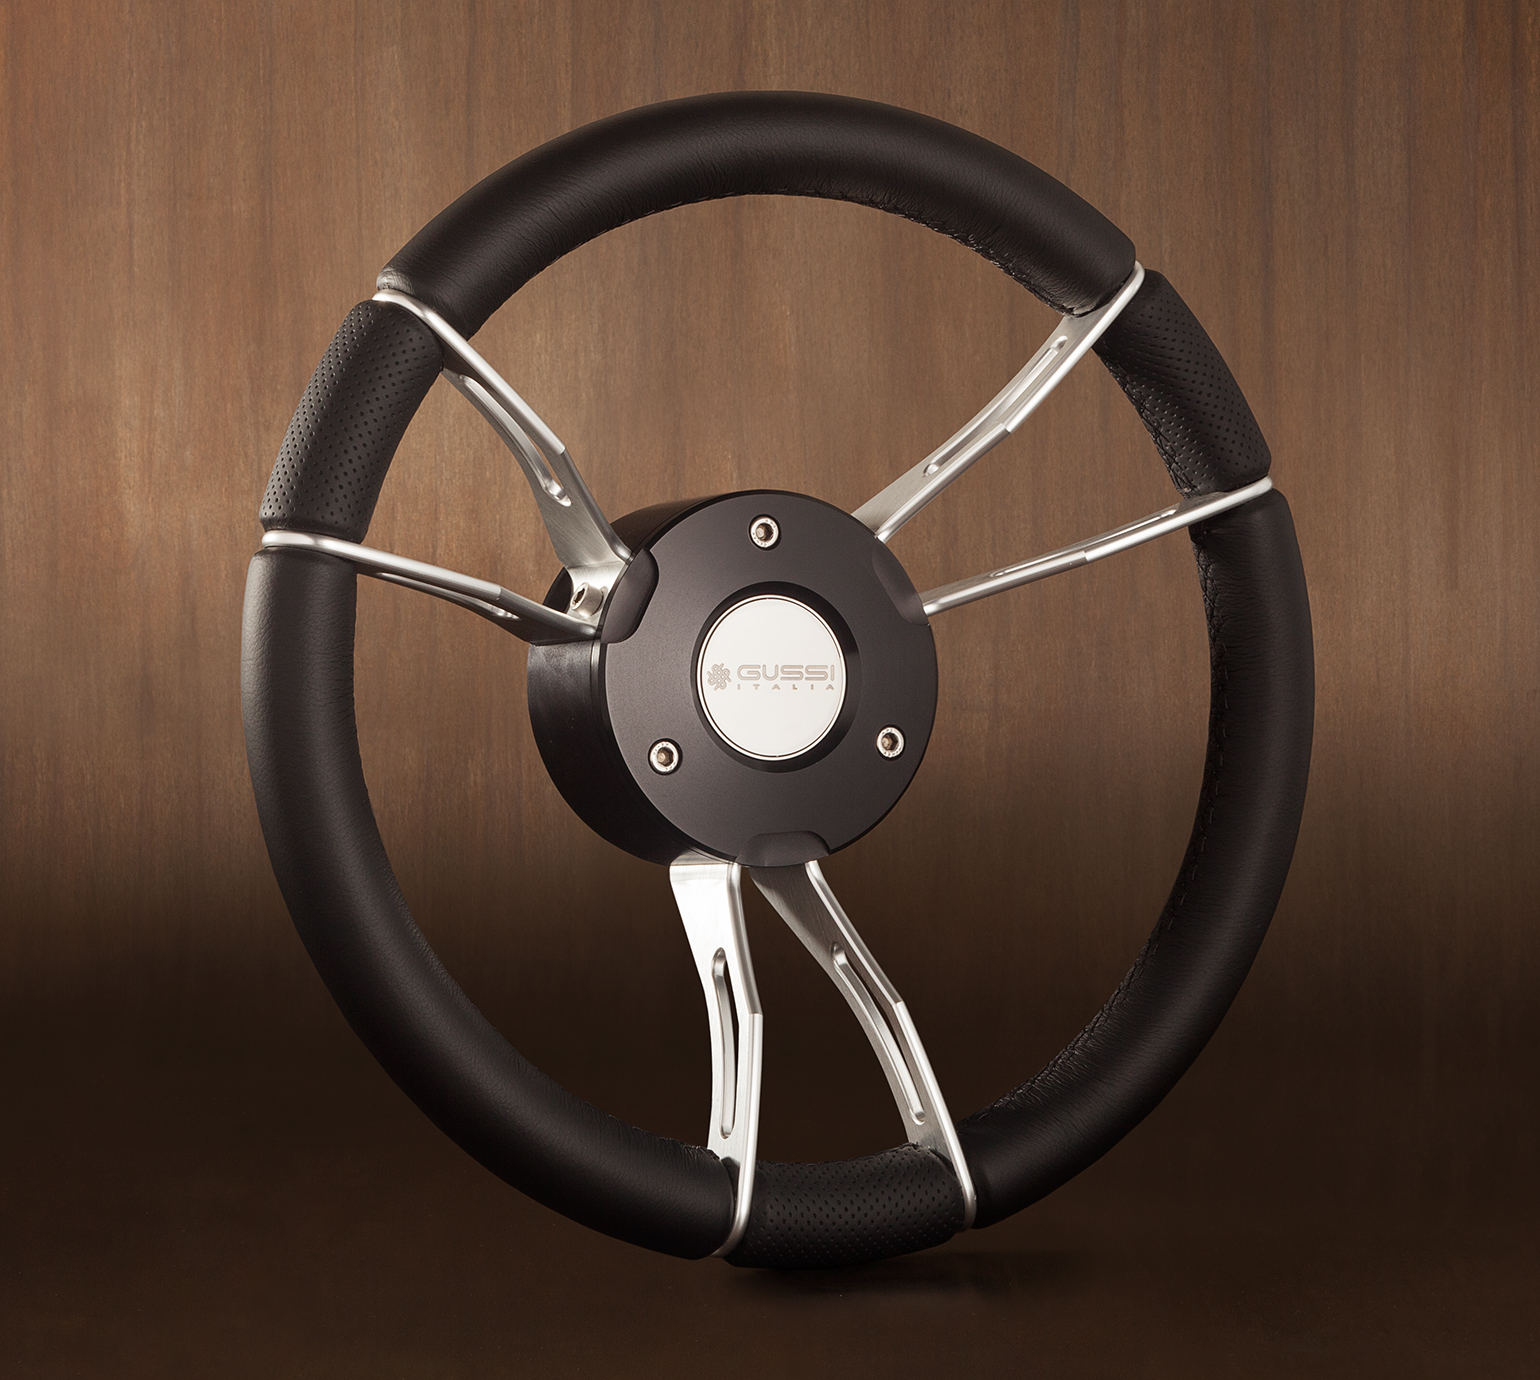 New Gussi Italia Boat Steering Wheel Selfleveling Center Black Leather Keyedhub